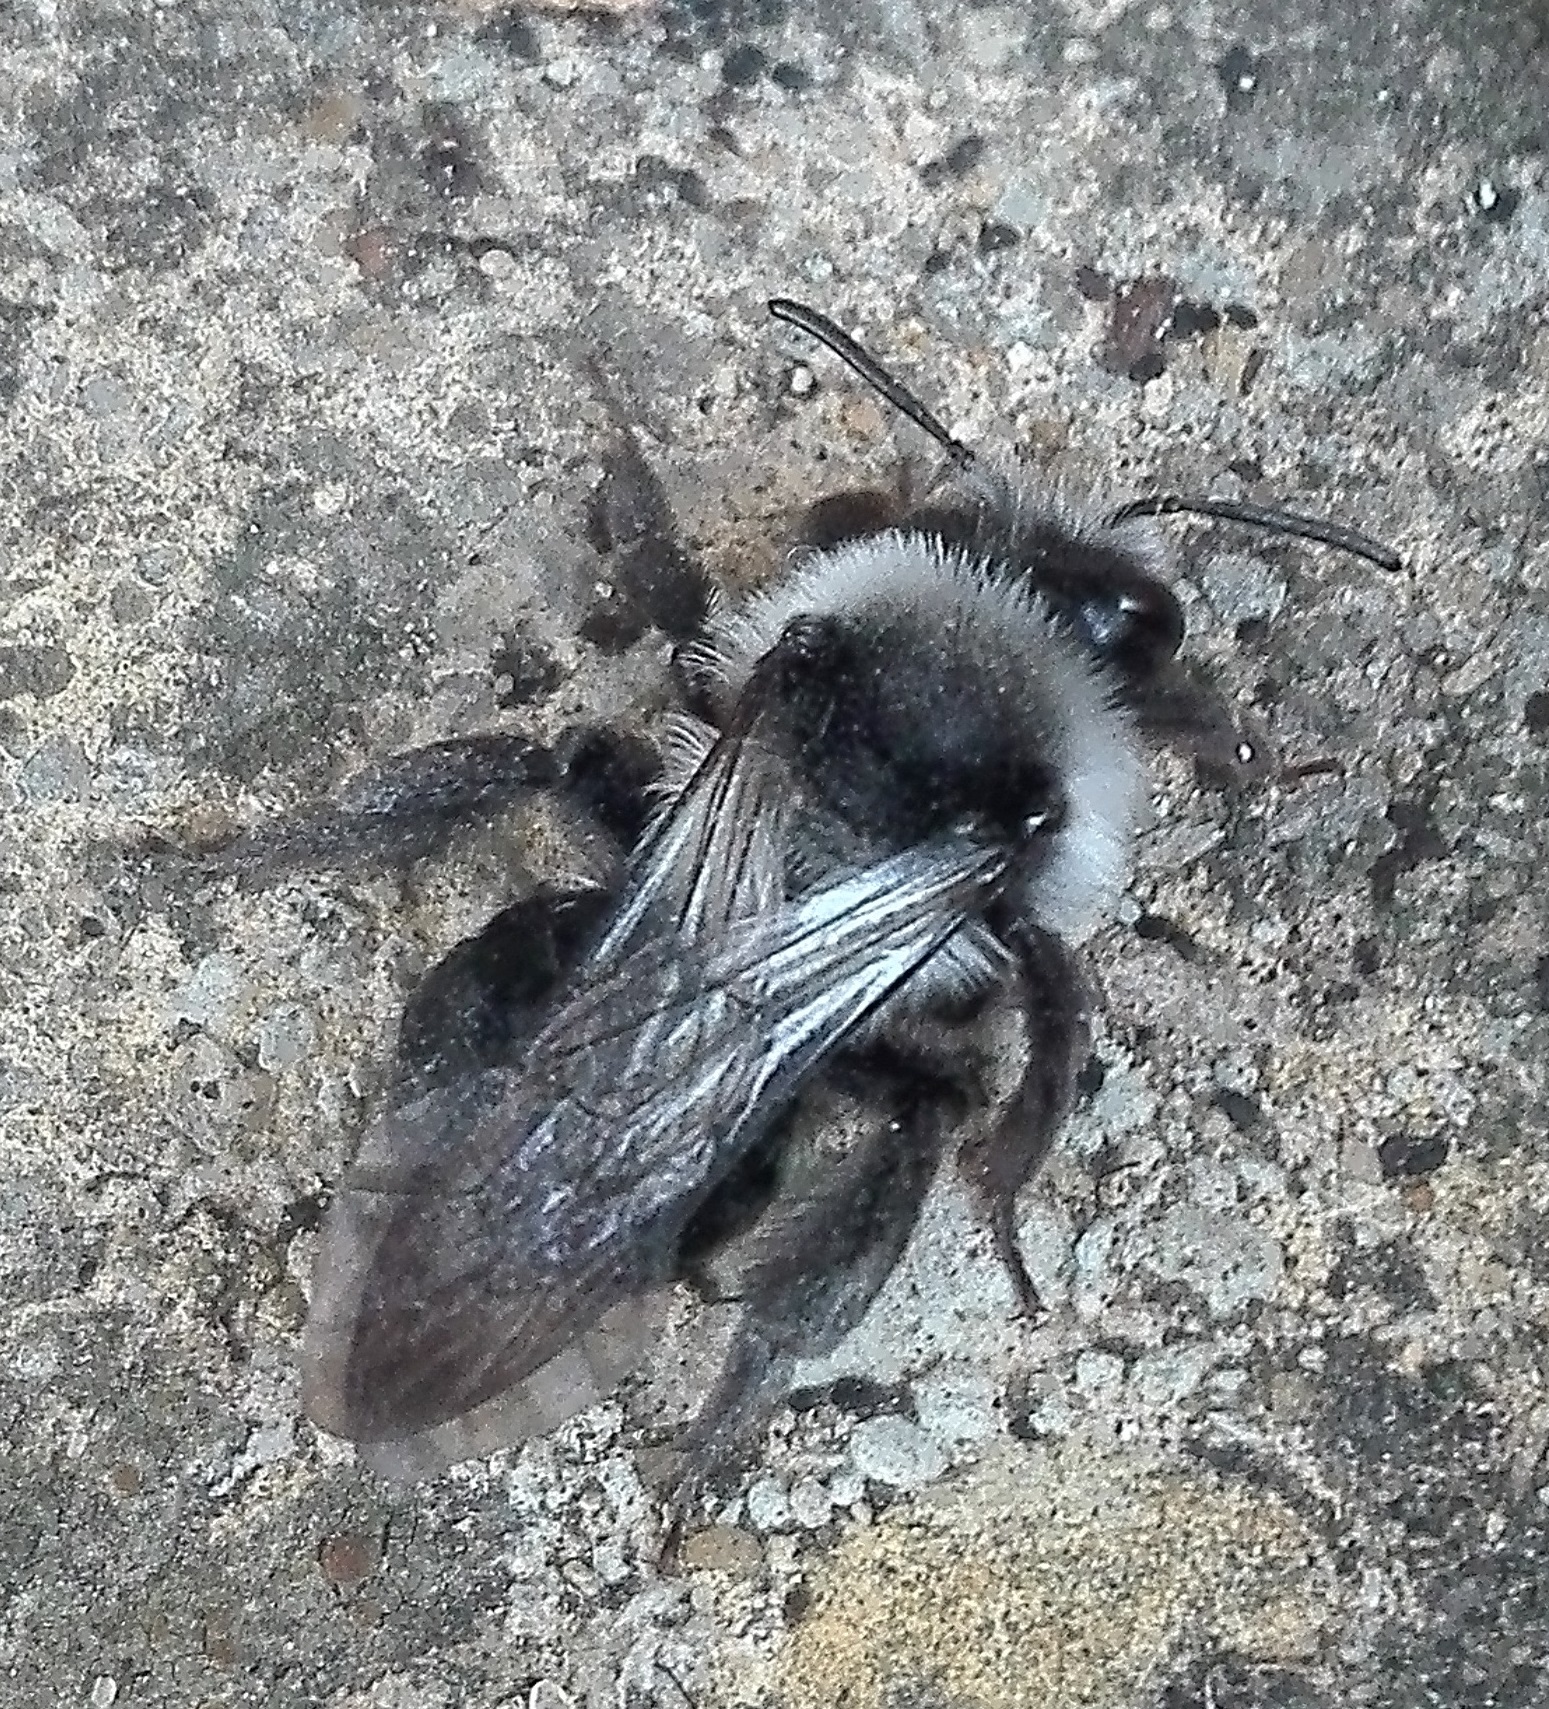 #61 Ashy Mining Bee (Andrena cineraria)